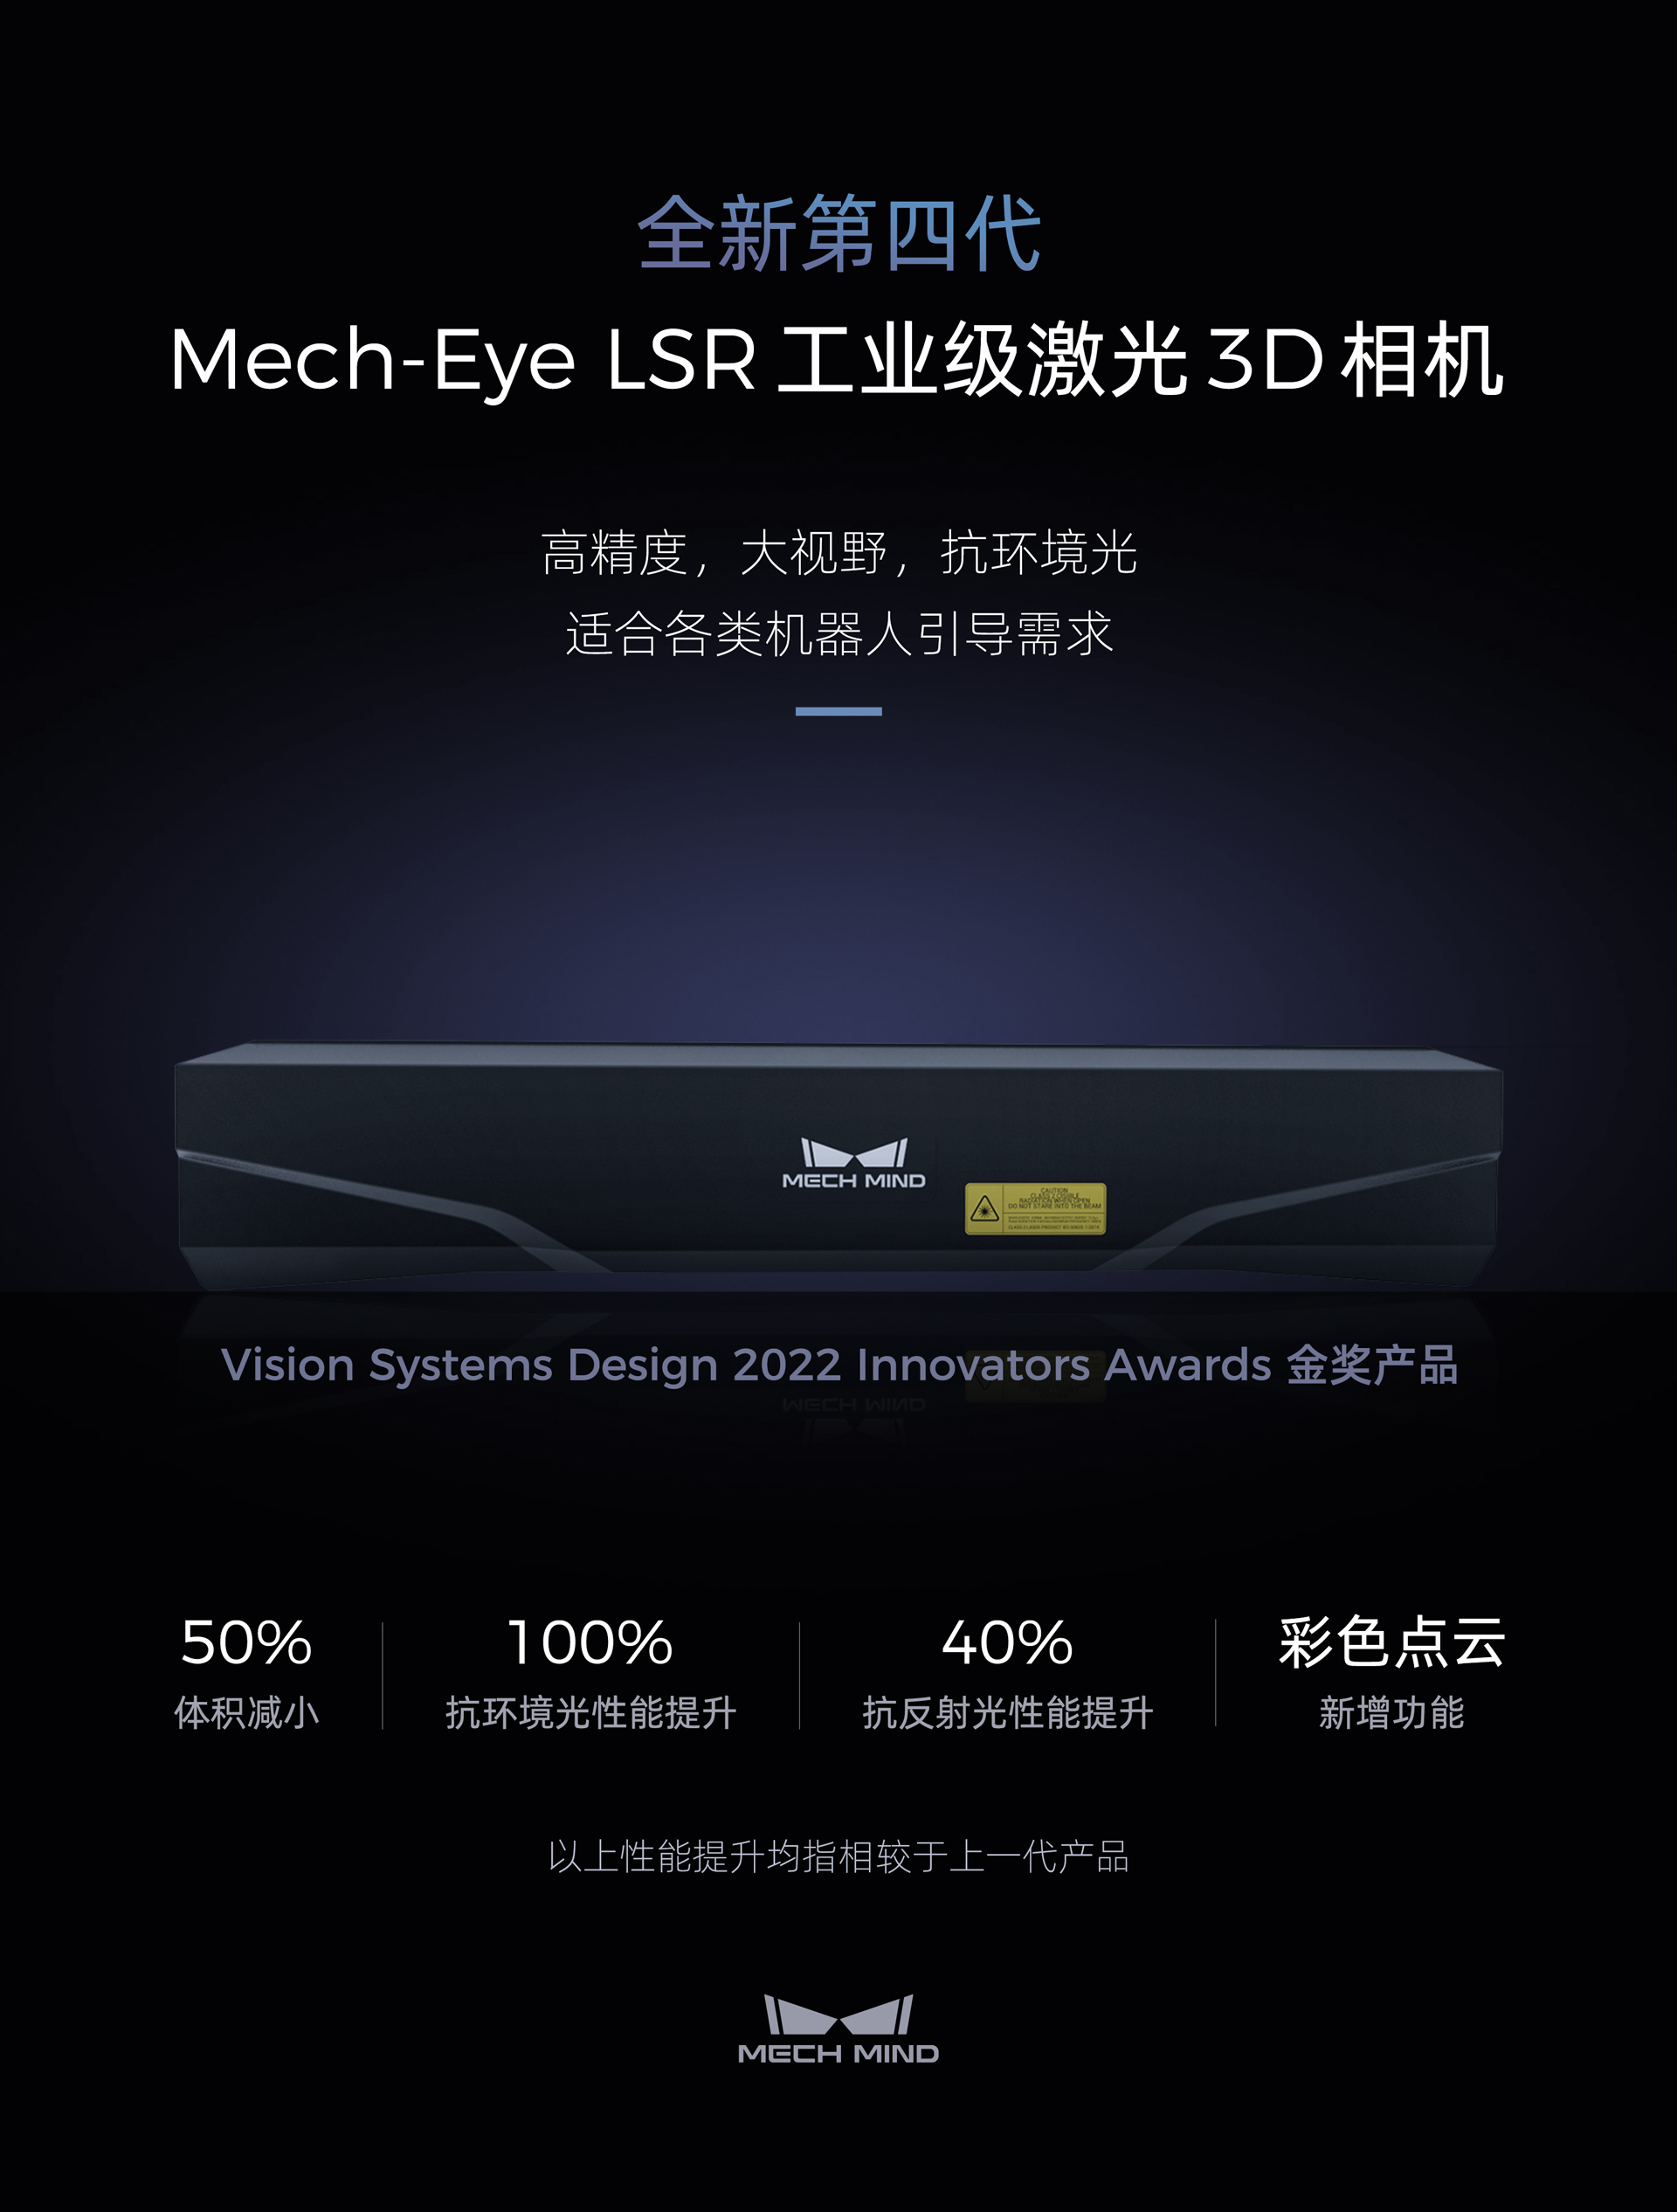 3D相机旗舰产品Mech-Eye LSR再升级——体积减小50%，抗环境光提升100%，新增彩色点云